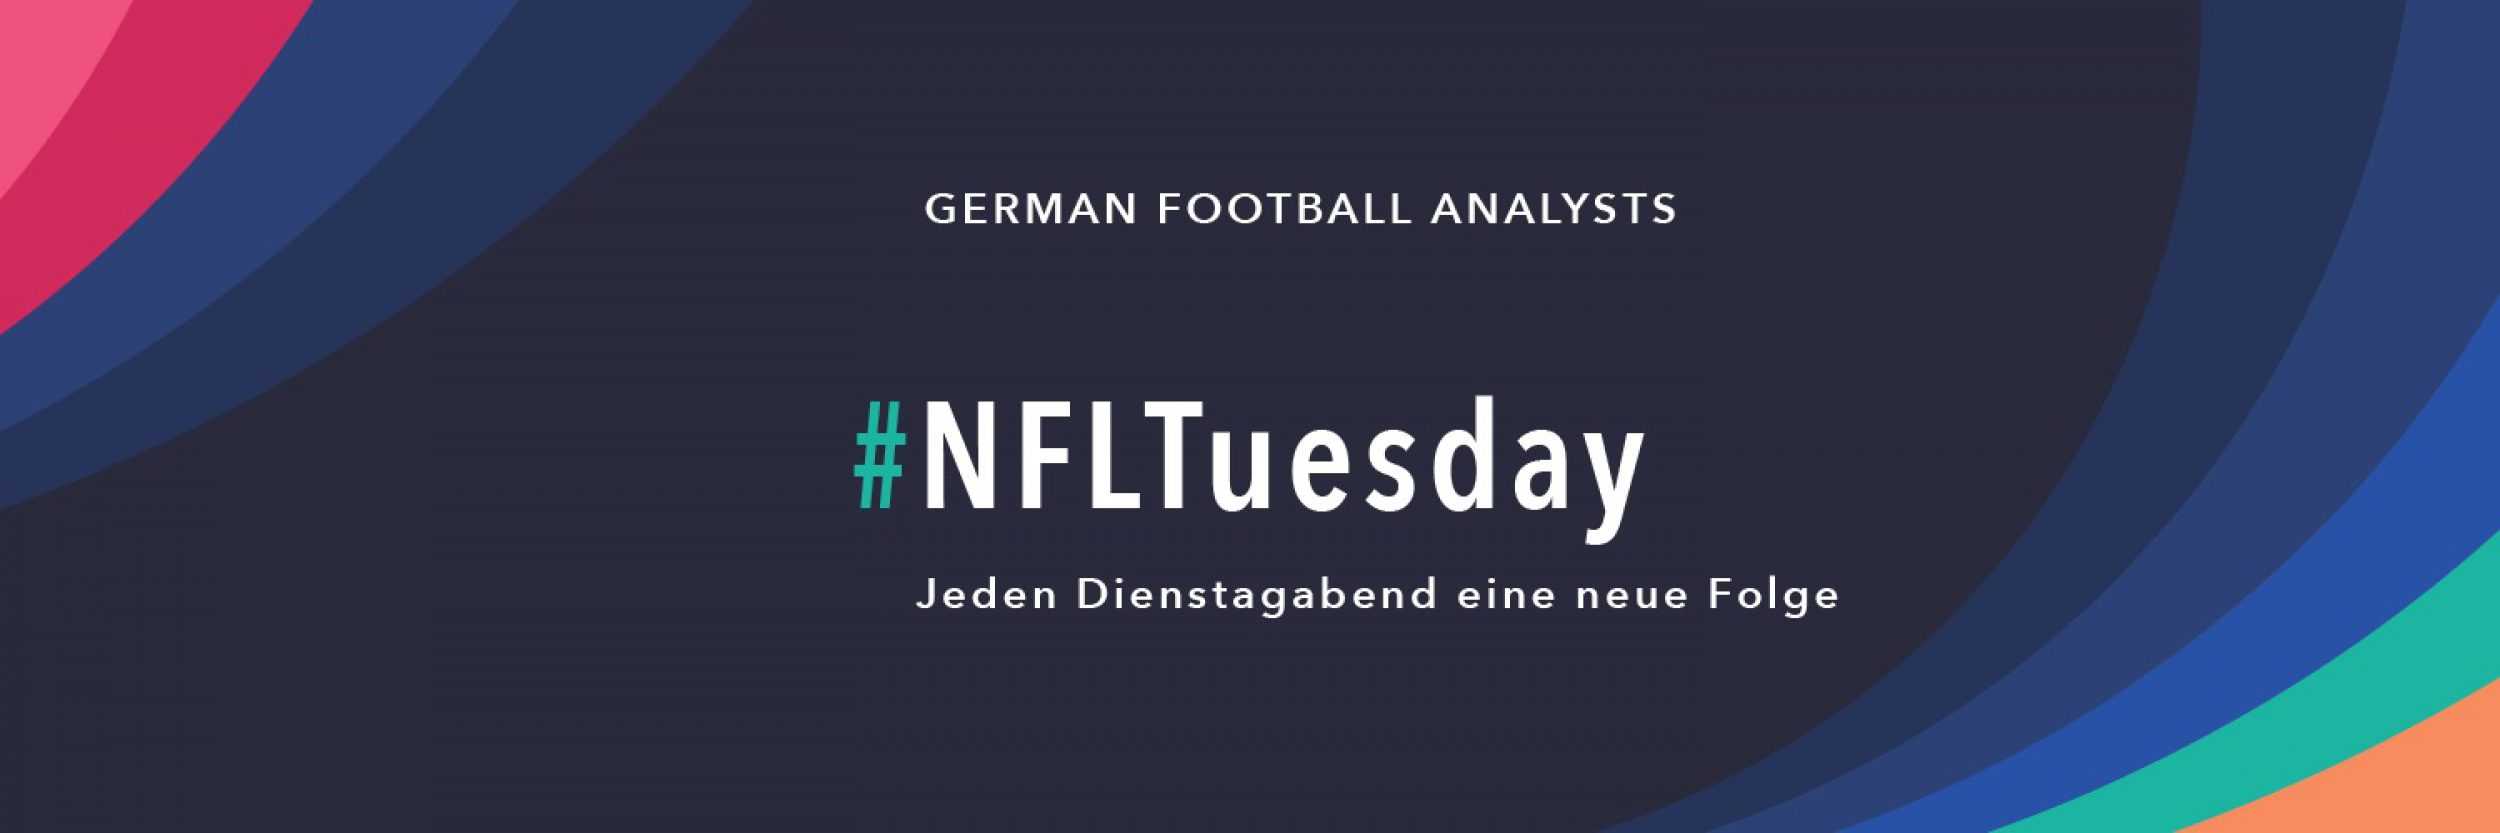 German Football Analysts